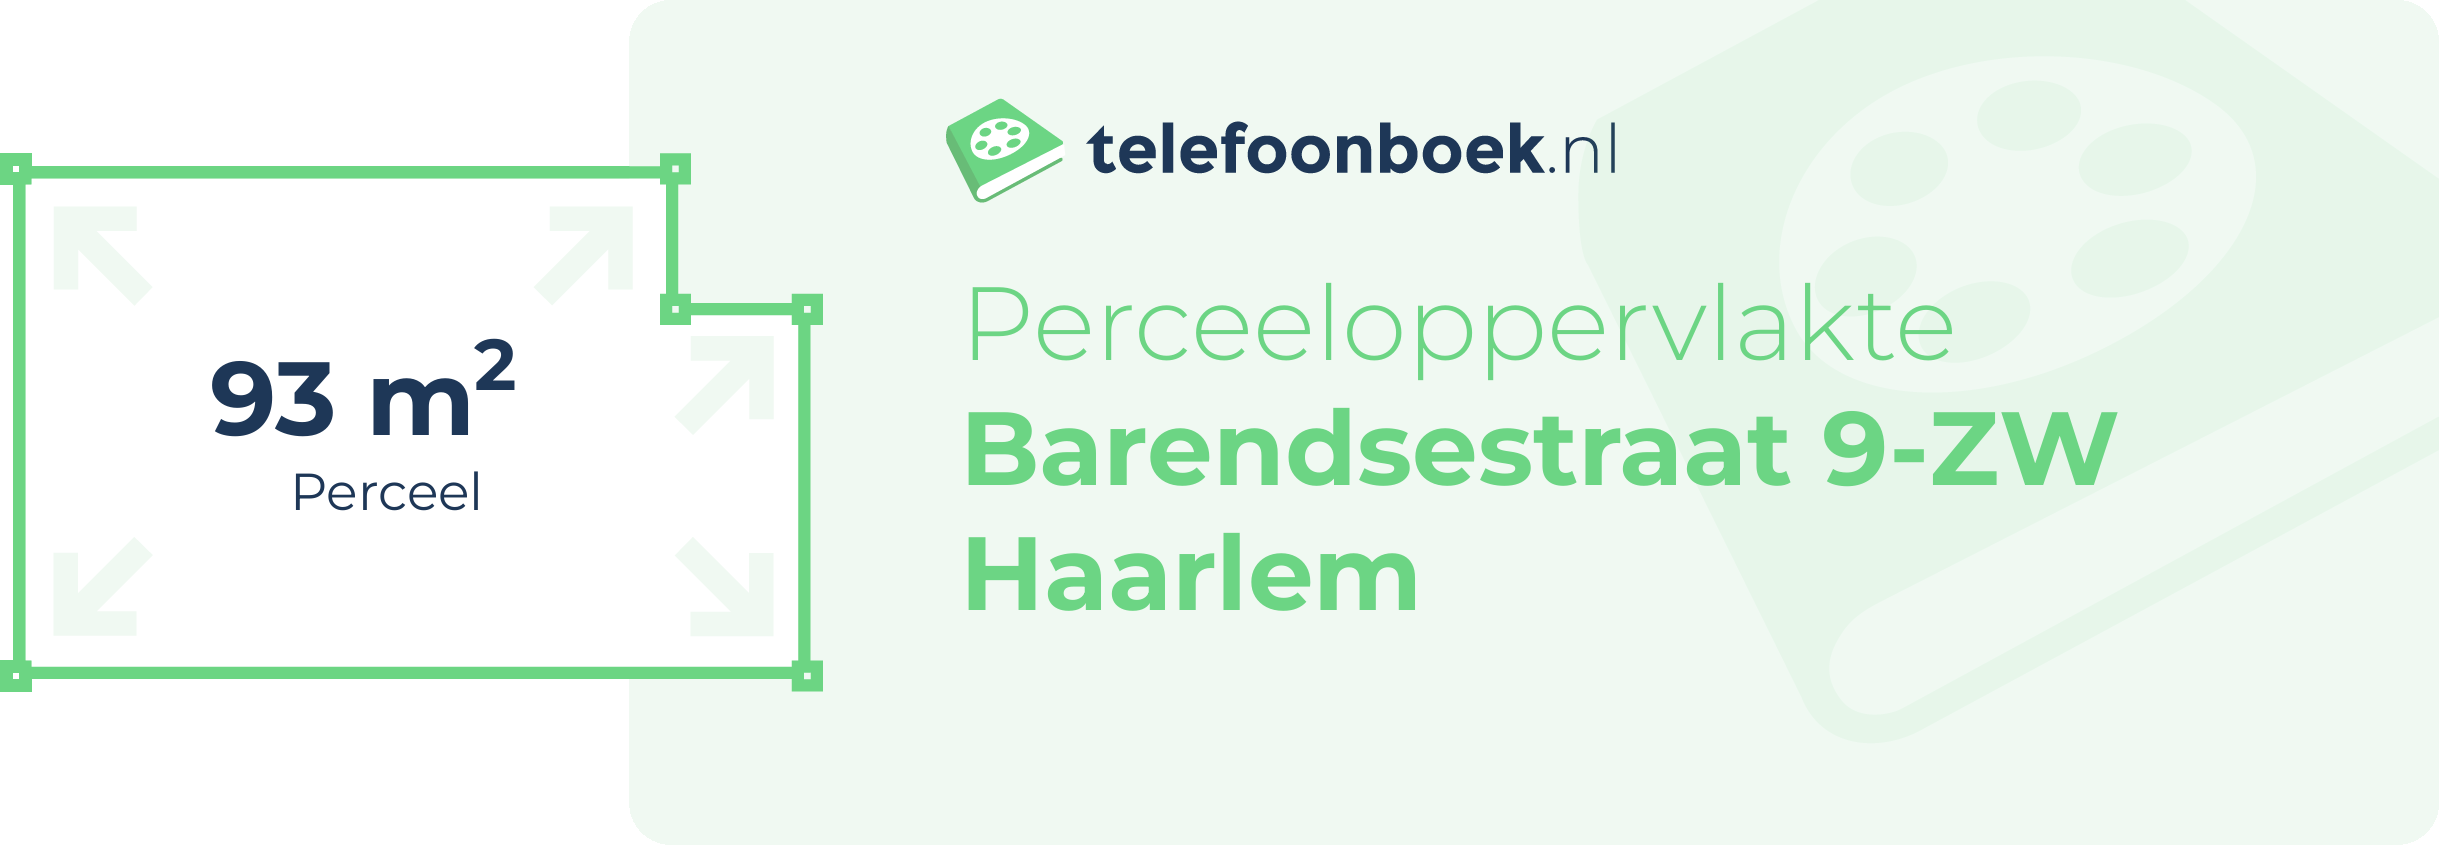 Perceeloppervlakte Barendsestraat 9-ZW Haarlem